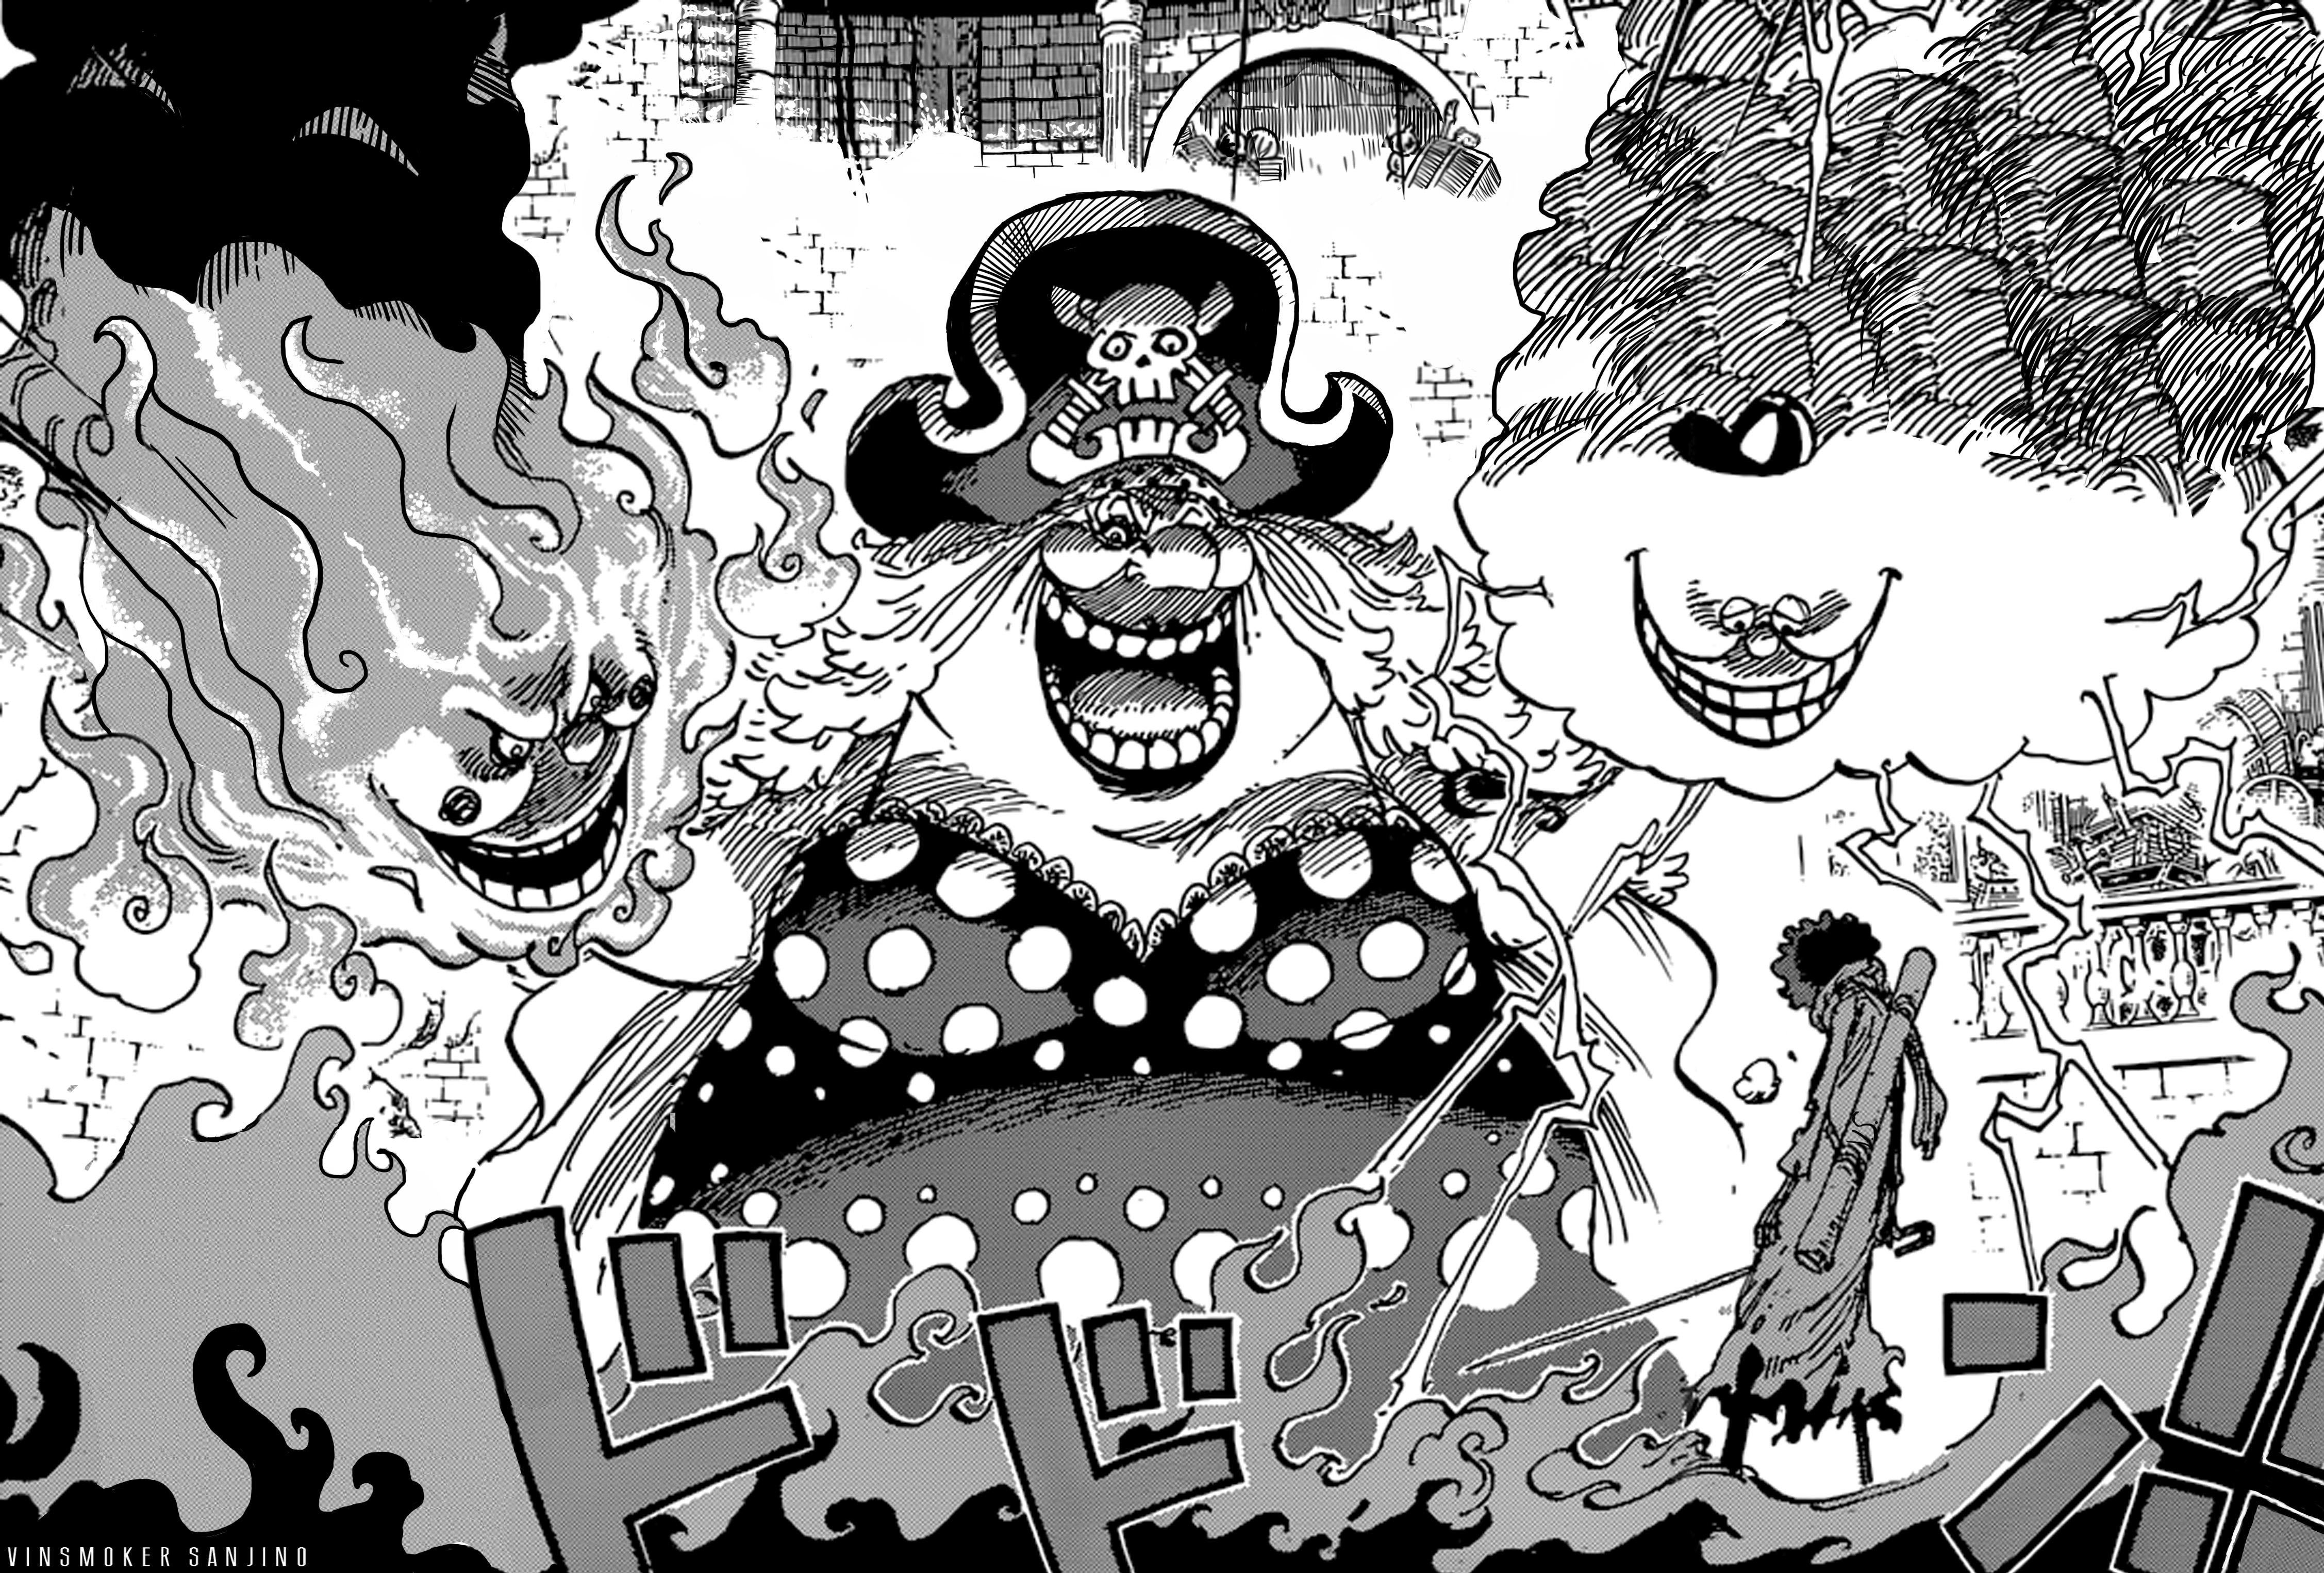 Brook One Piece Manga Wallpapers - Wallpaper Cave